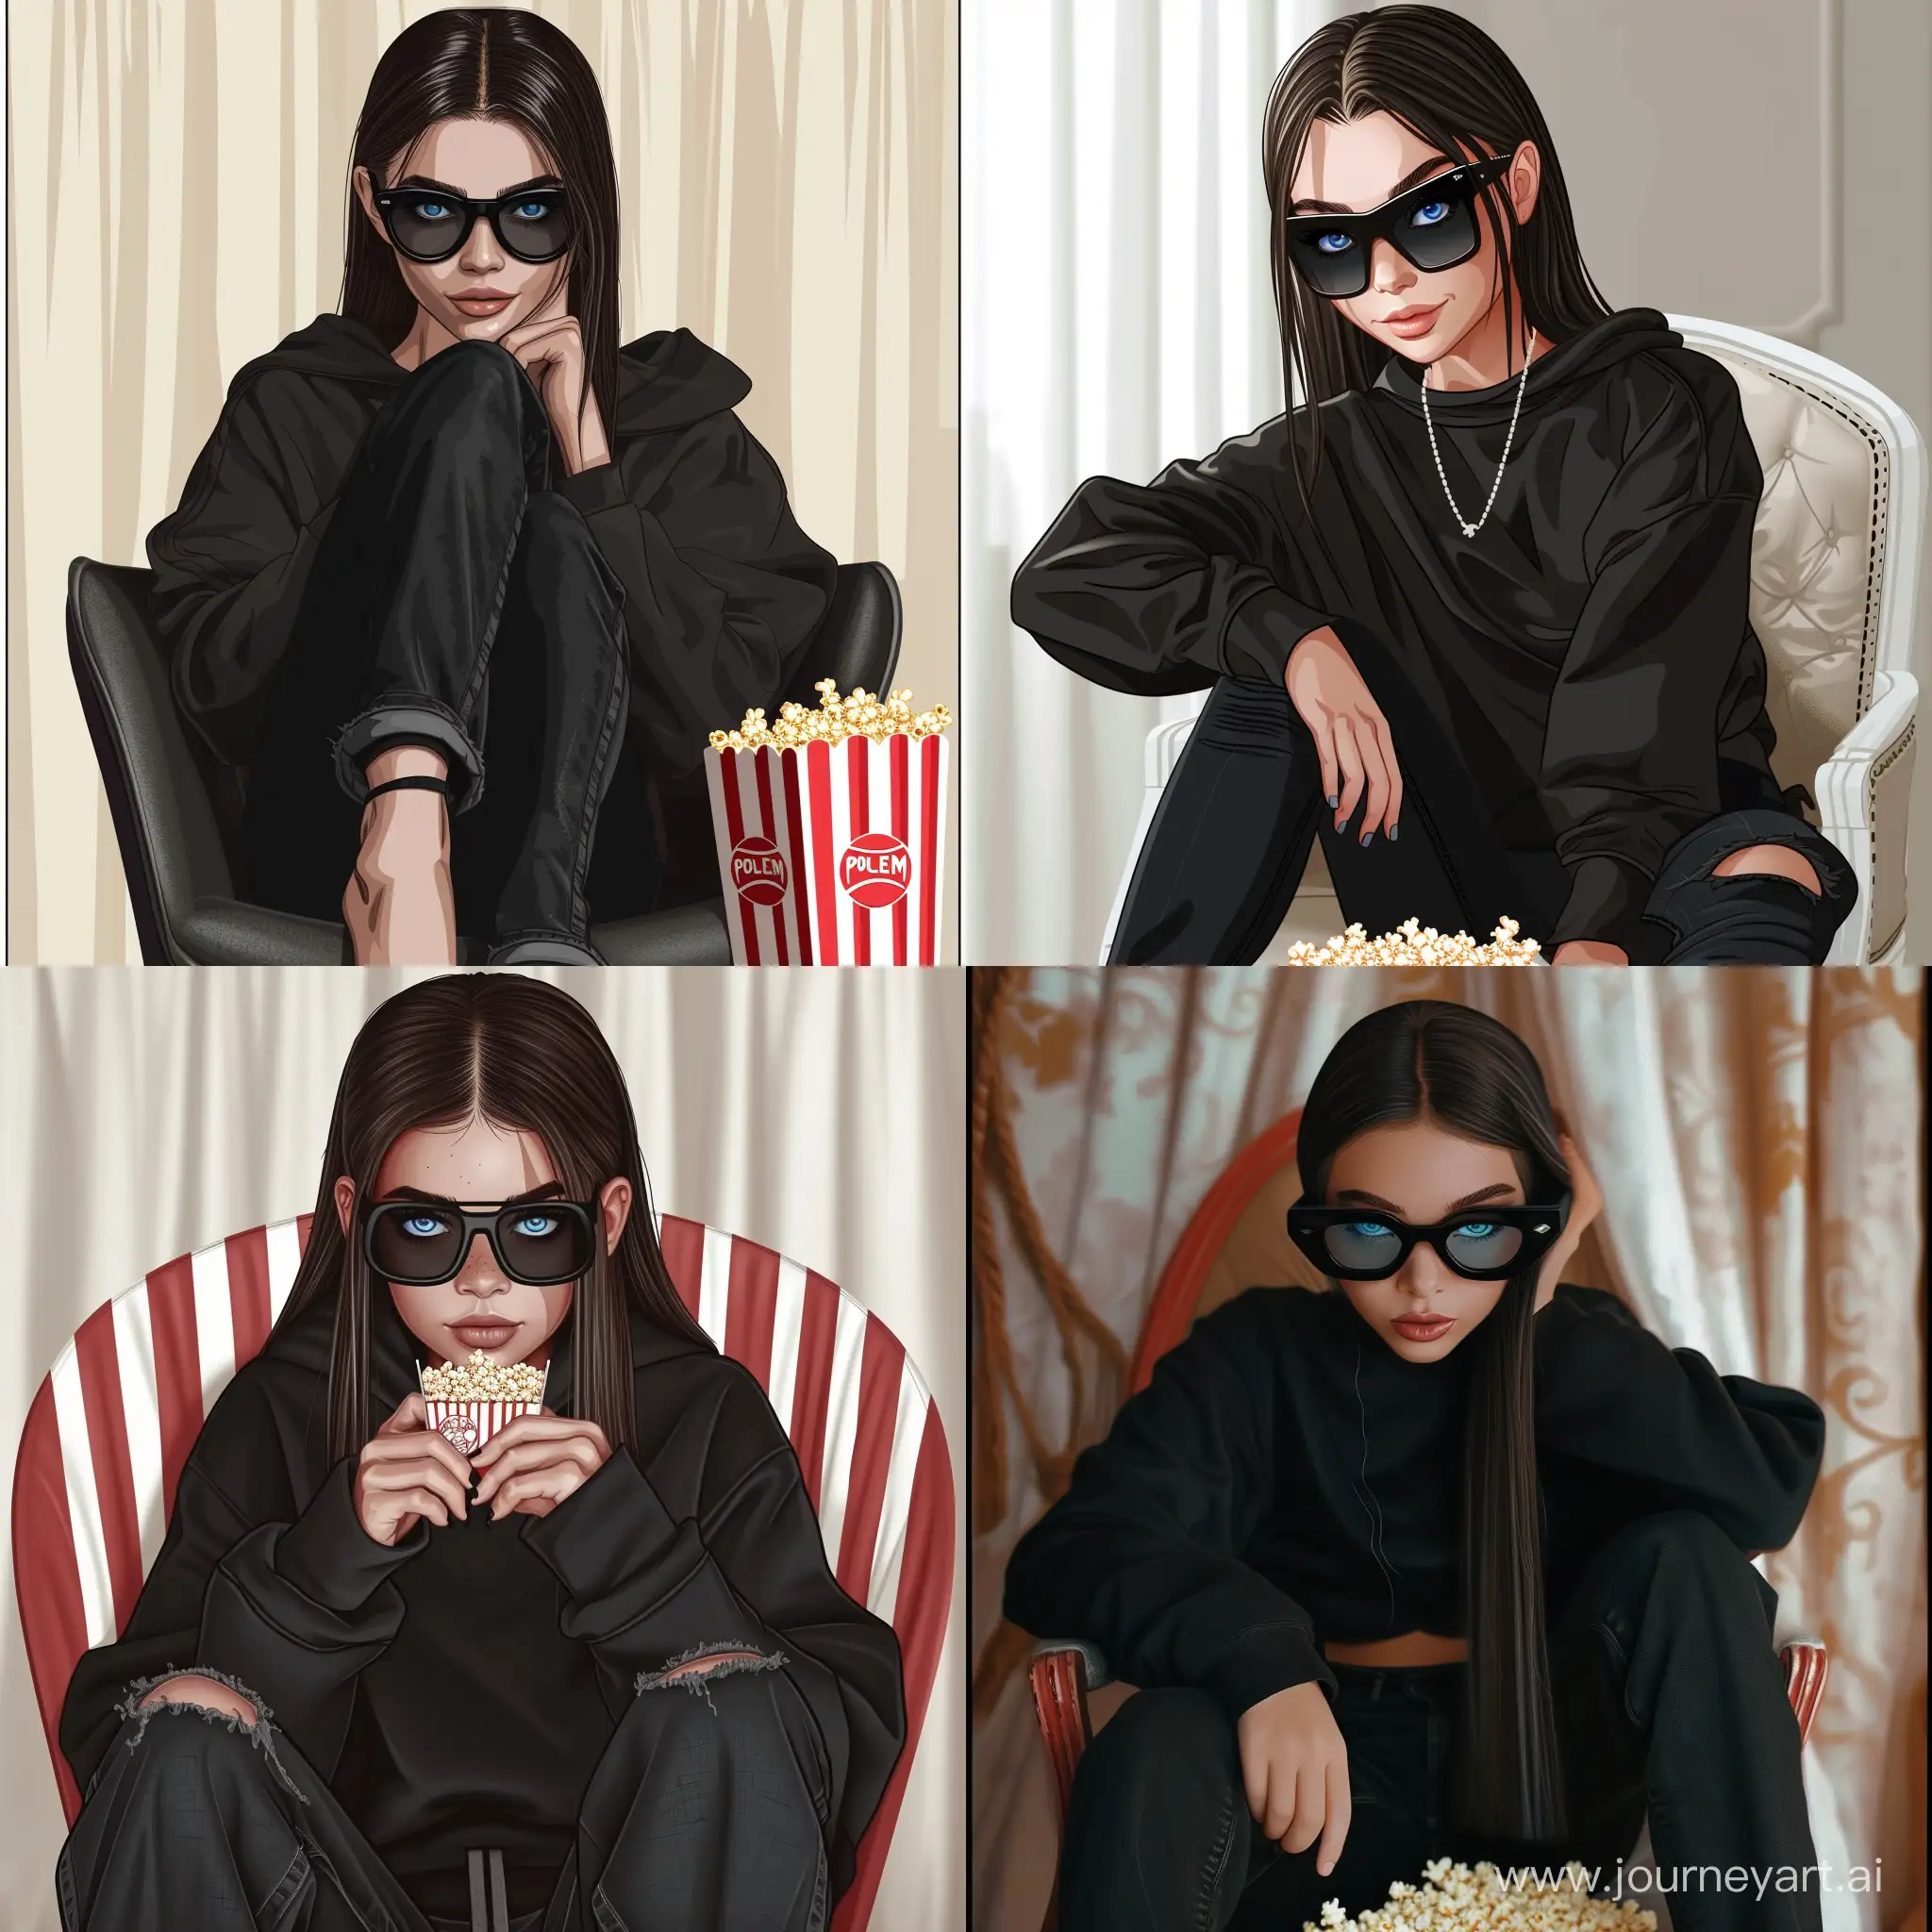 Serene-Teenager-Enjoying-Movie-Night-with-Stylish-Black-Outfit-and-Popcorn